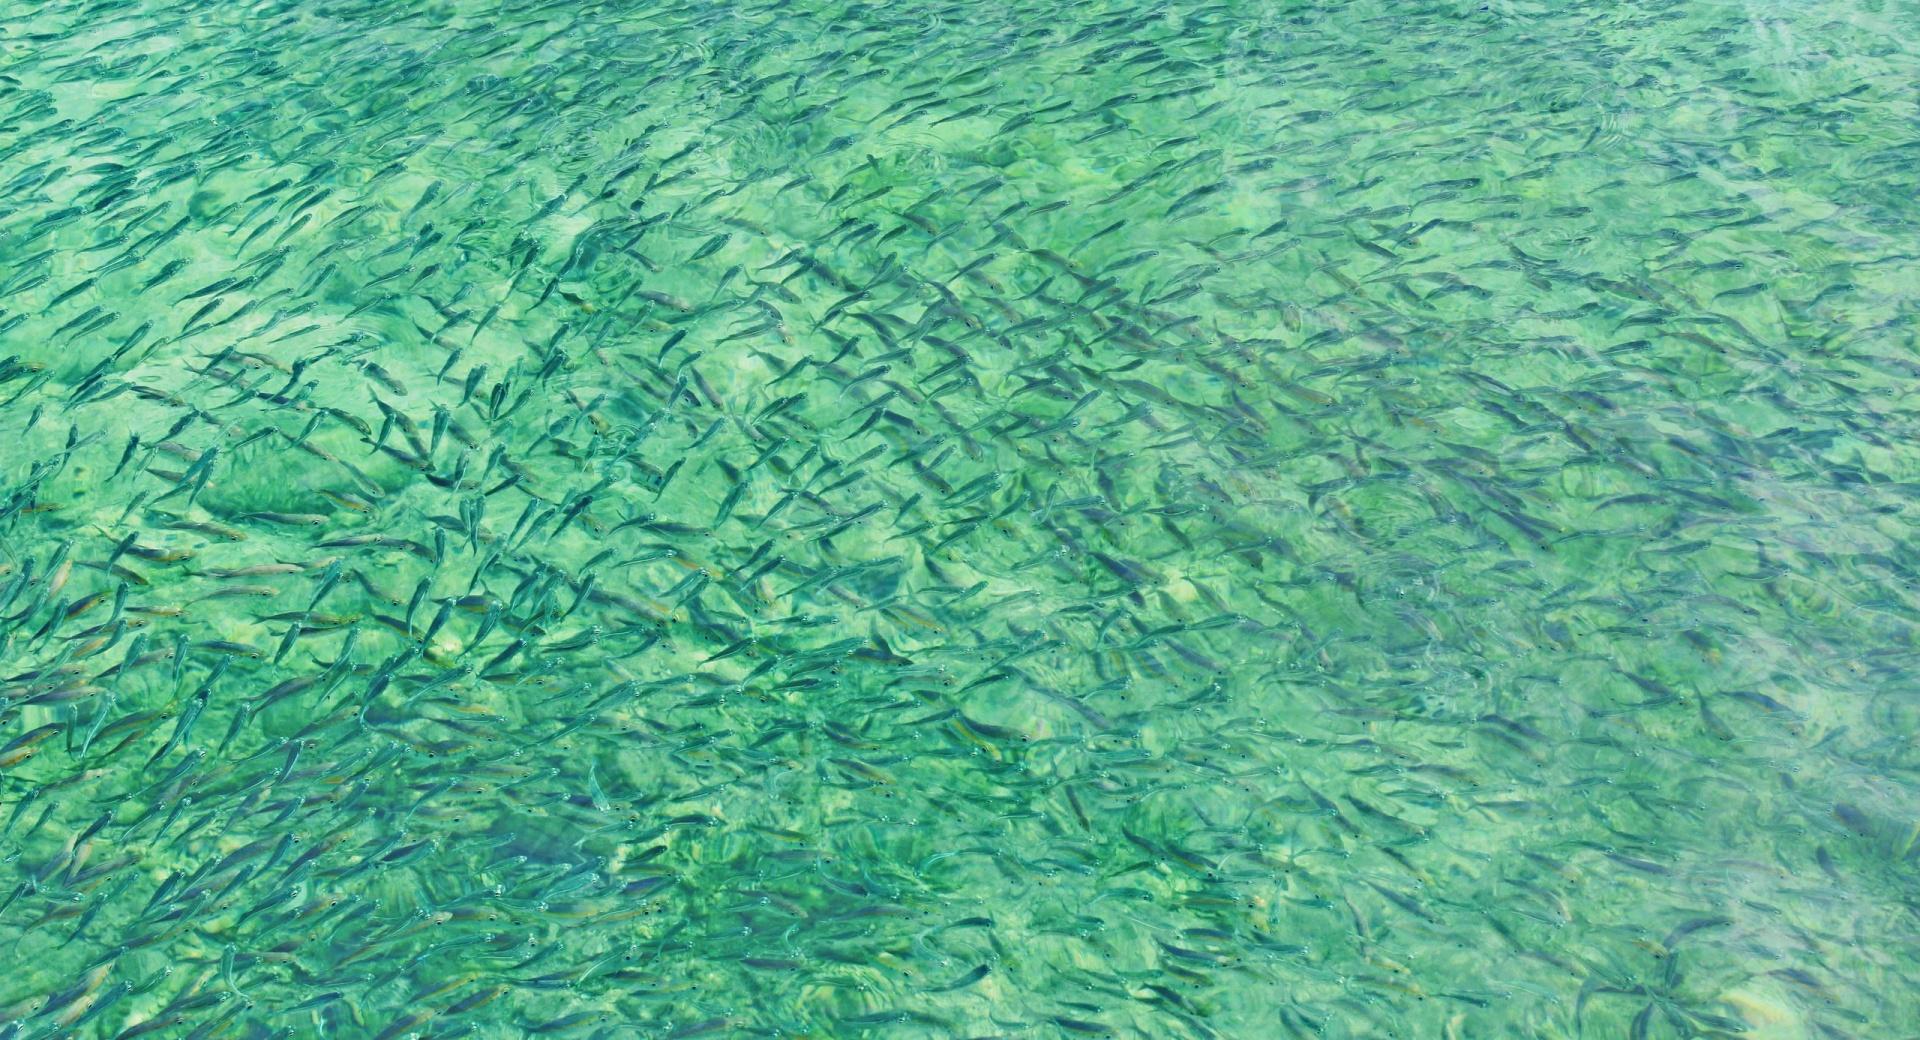 Ikan Ikan Kecil at 750 x 1334 iPhone 6 size wallpapers HD quality